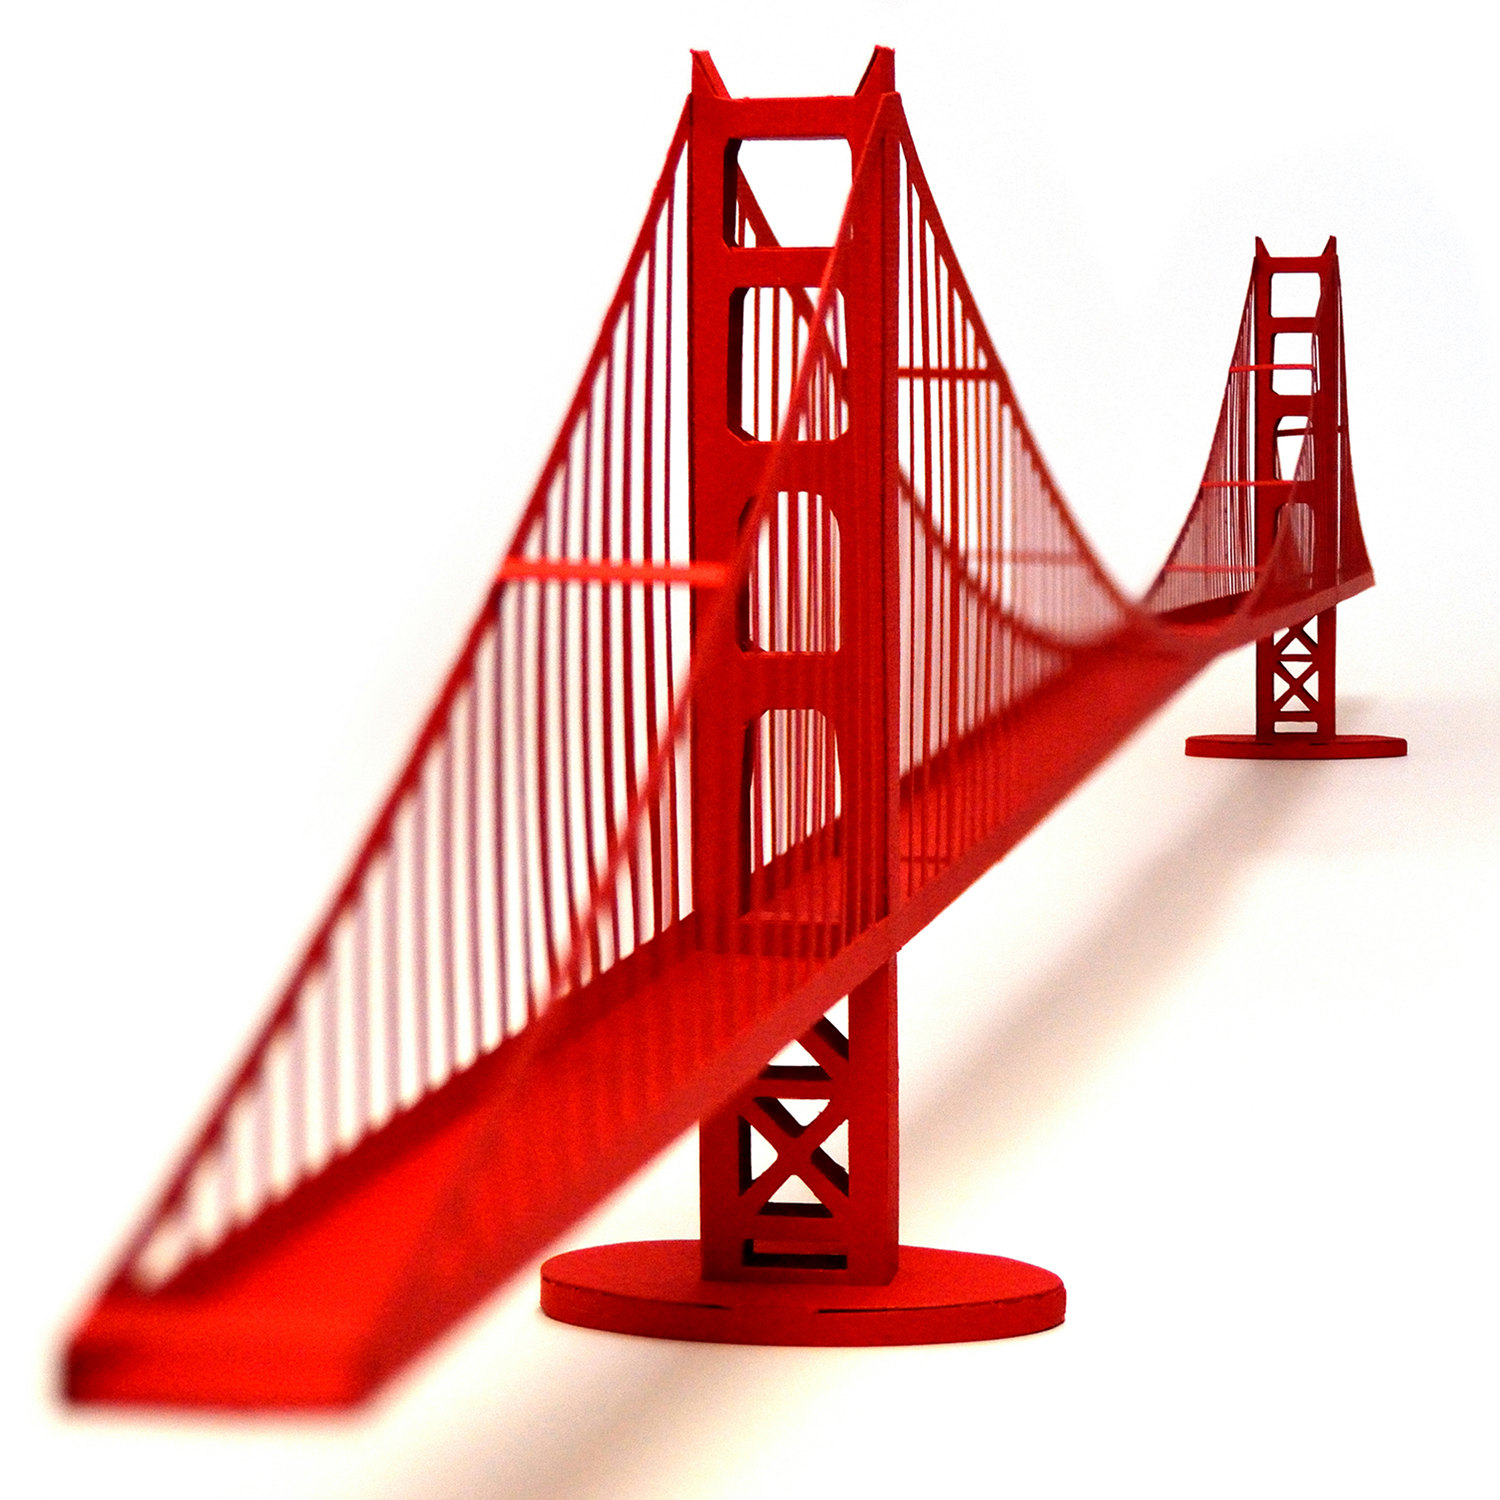 Golden Gate Bridge paper model kit with pre-cut by PaperLandmarks